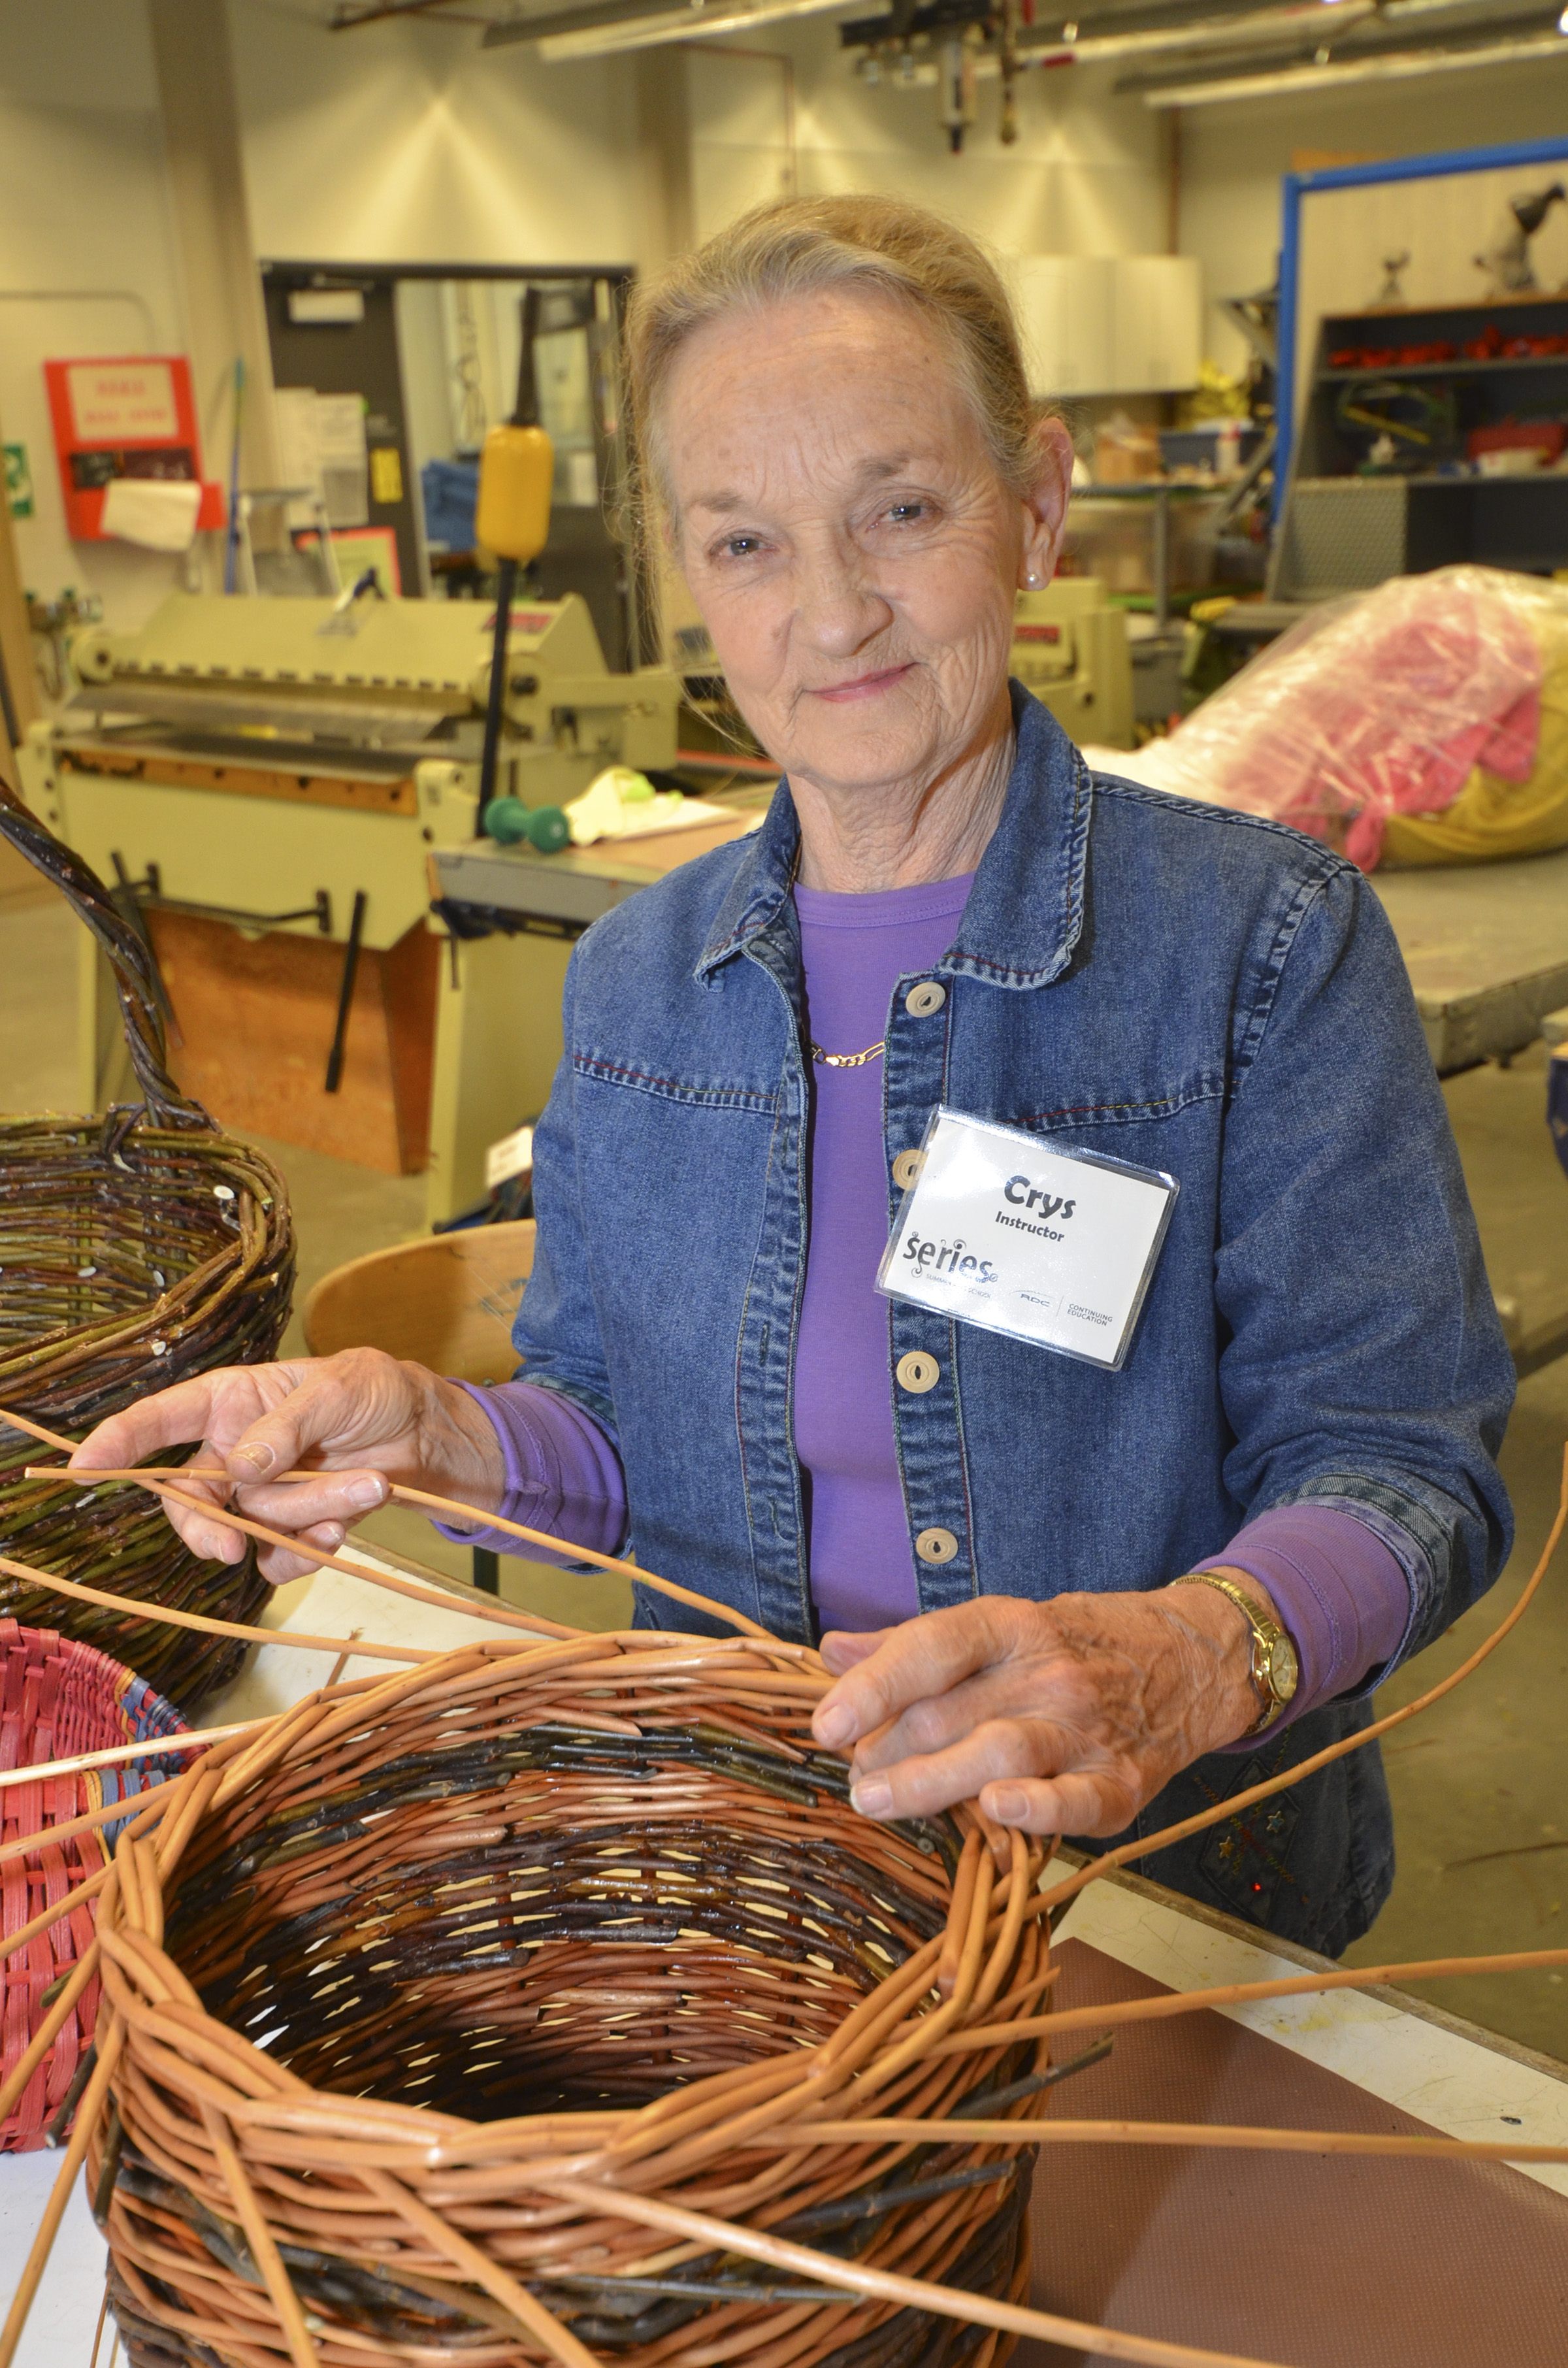 ART FORM – Crys Harse demonstrates the art of basket weaving at Red Deer College last week